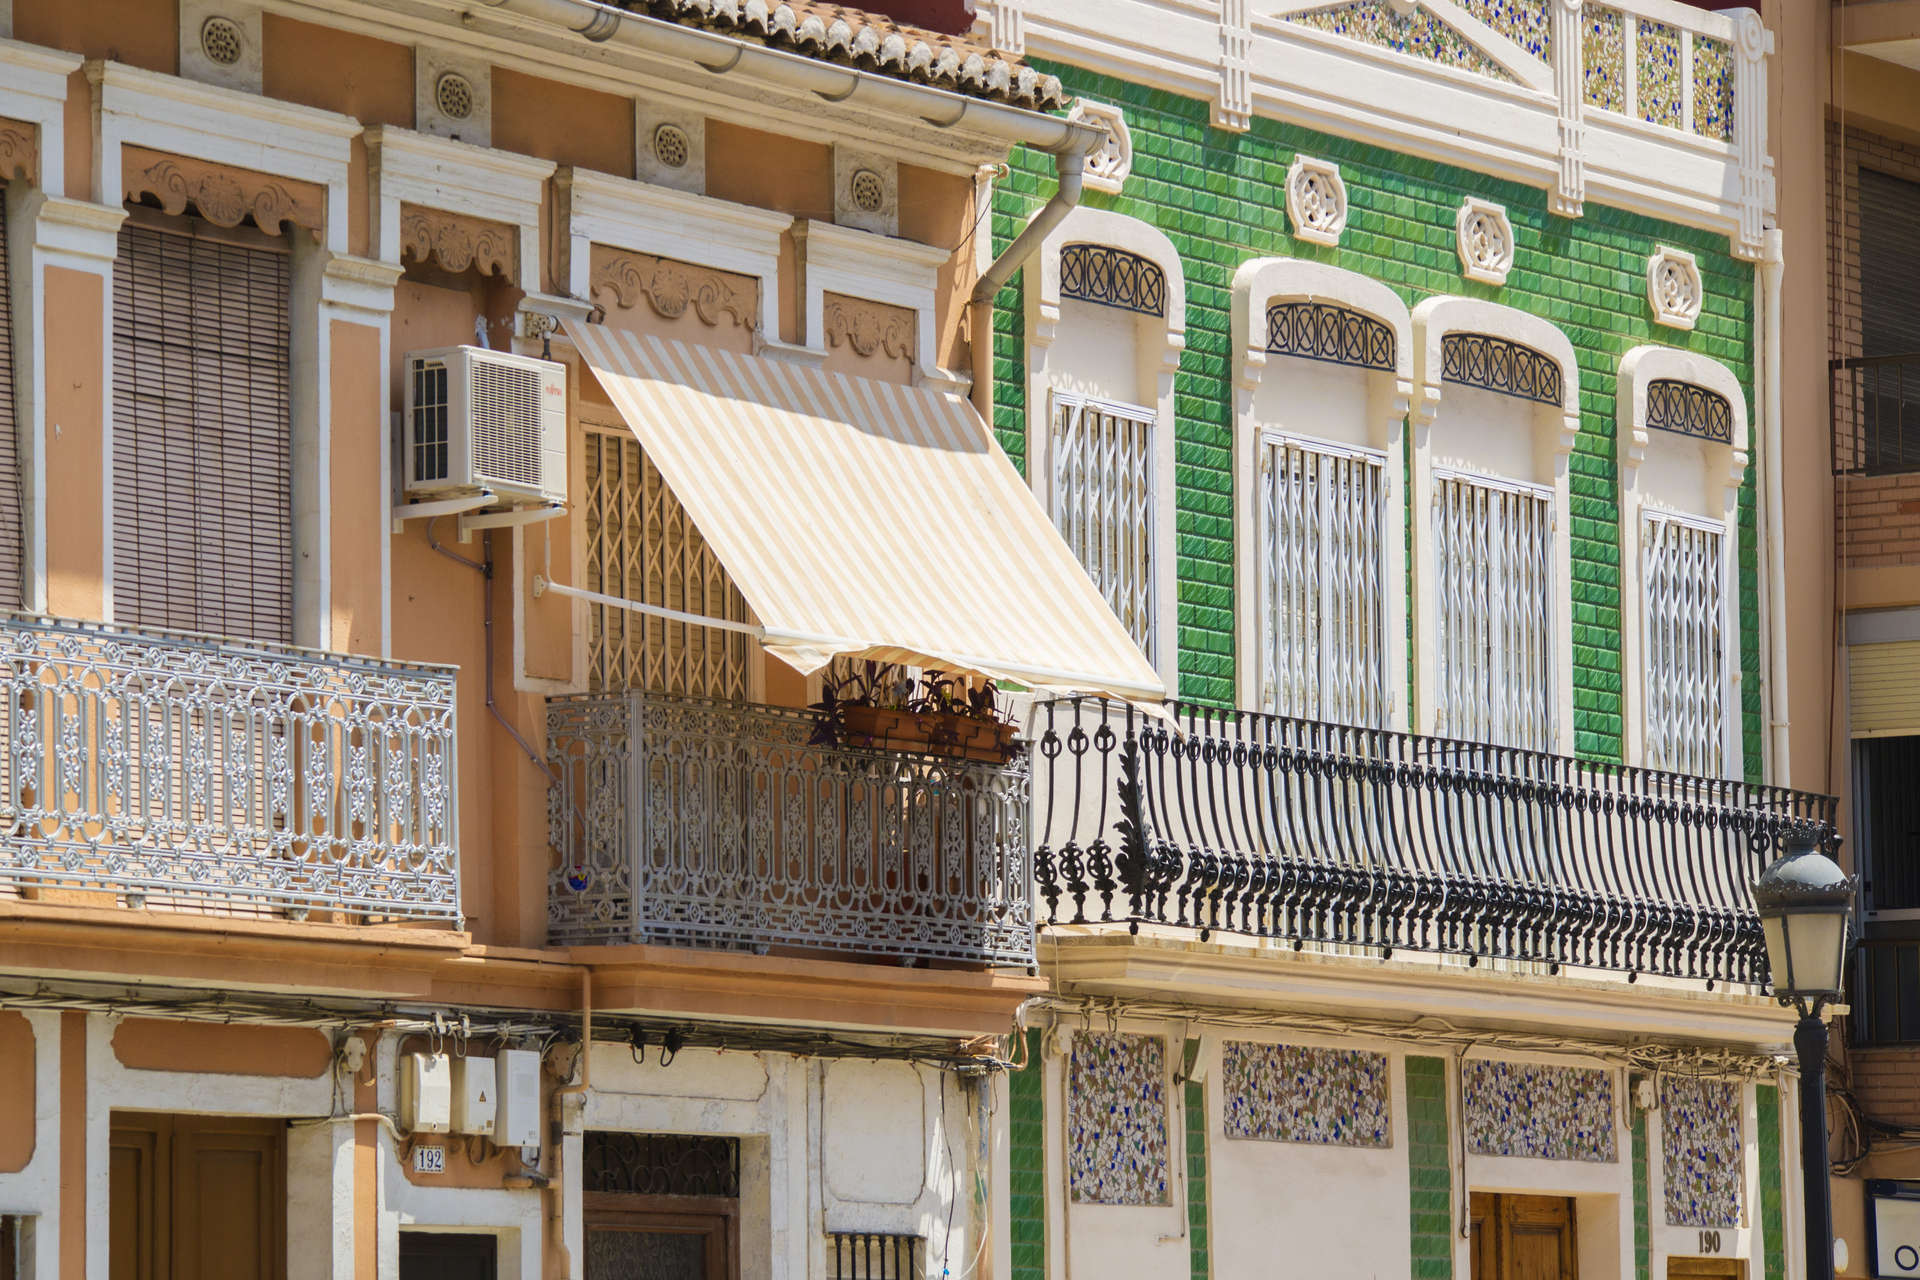 Valencia's El Cabanyal neighbourhood is full of historic houses